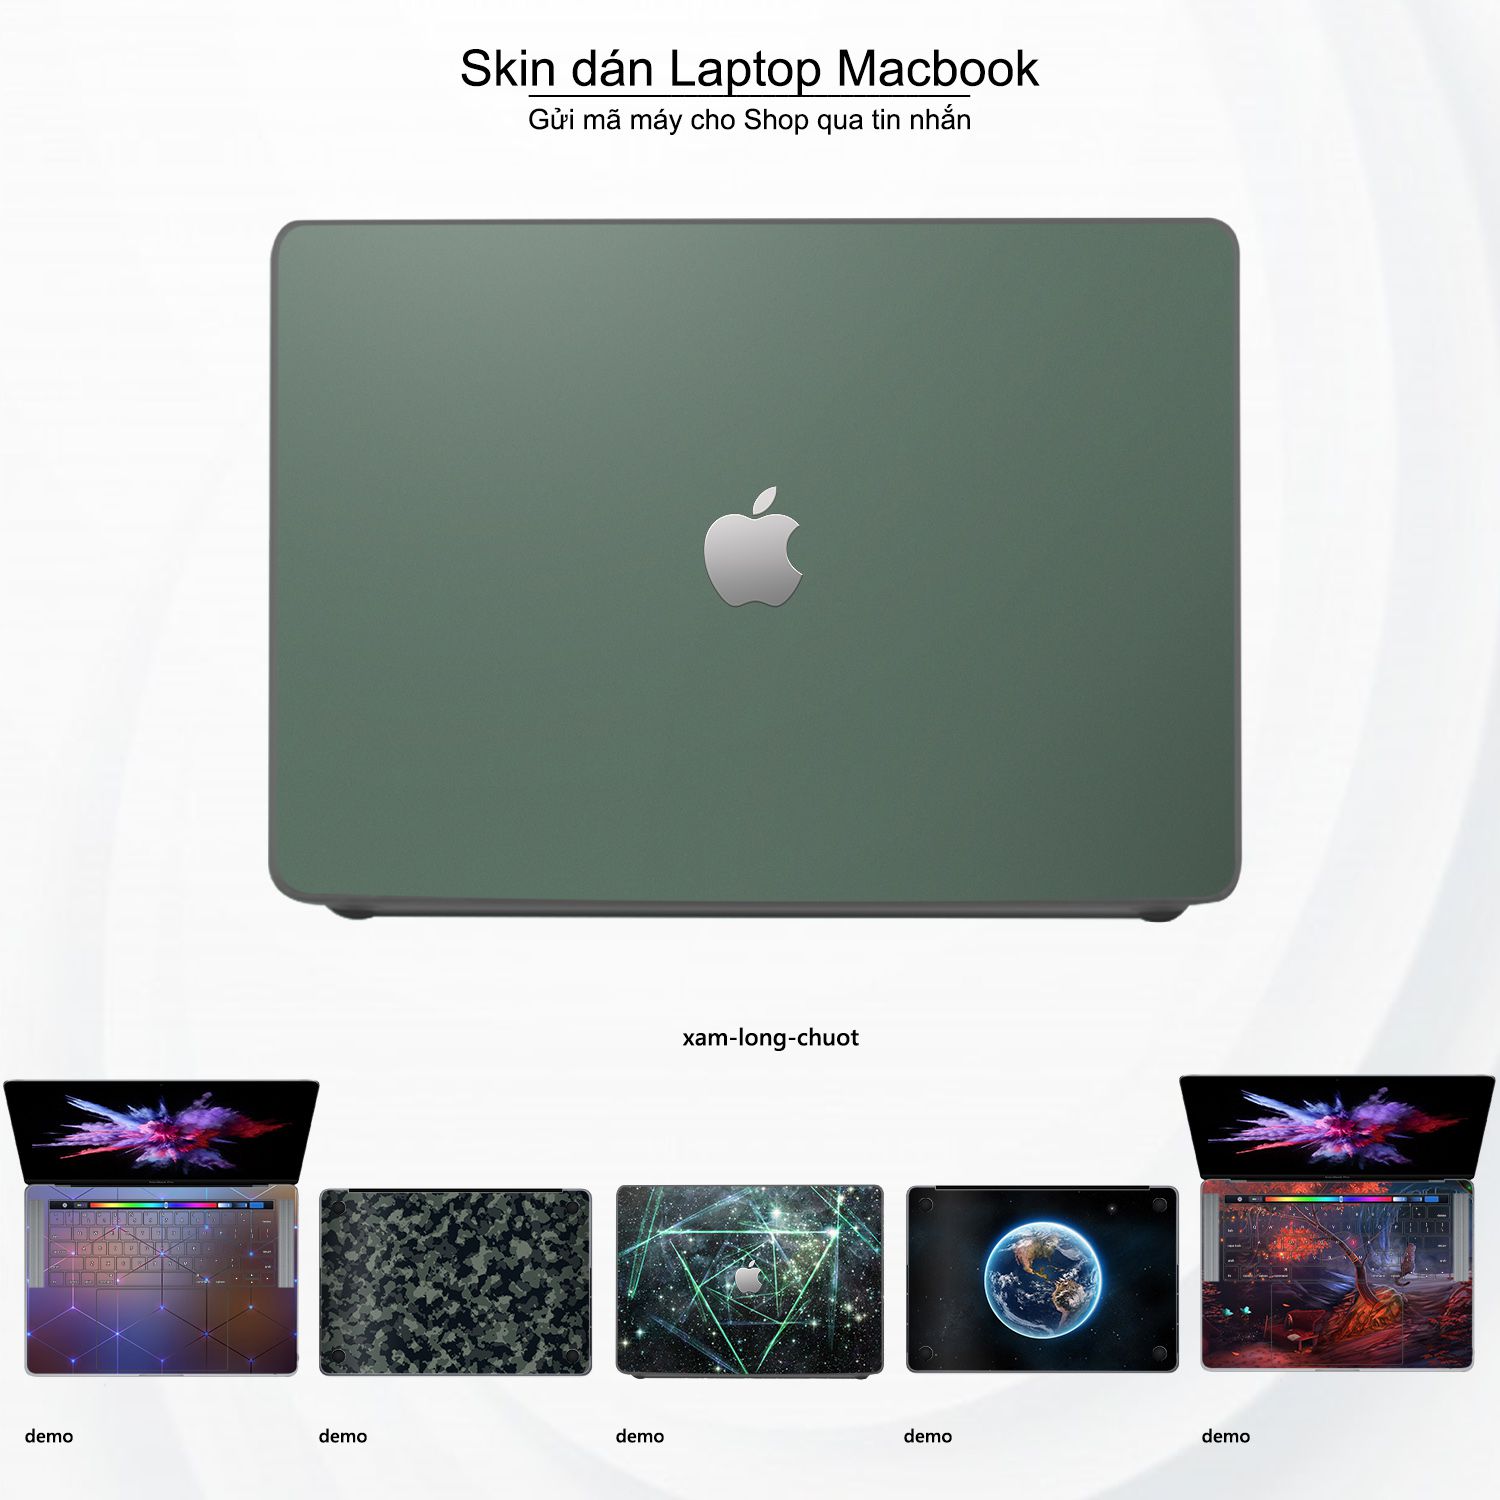 Decal Skin dán Macbook, laptop mẫu Aluminum Chrome xám lông chuột inbox mã